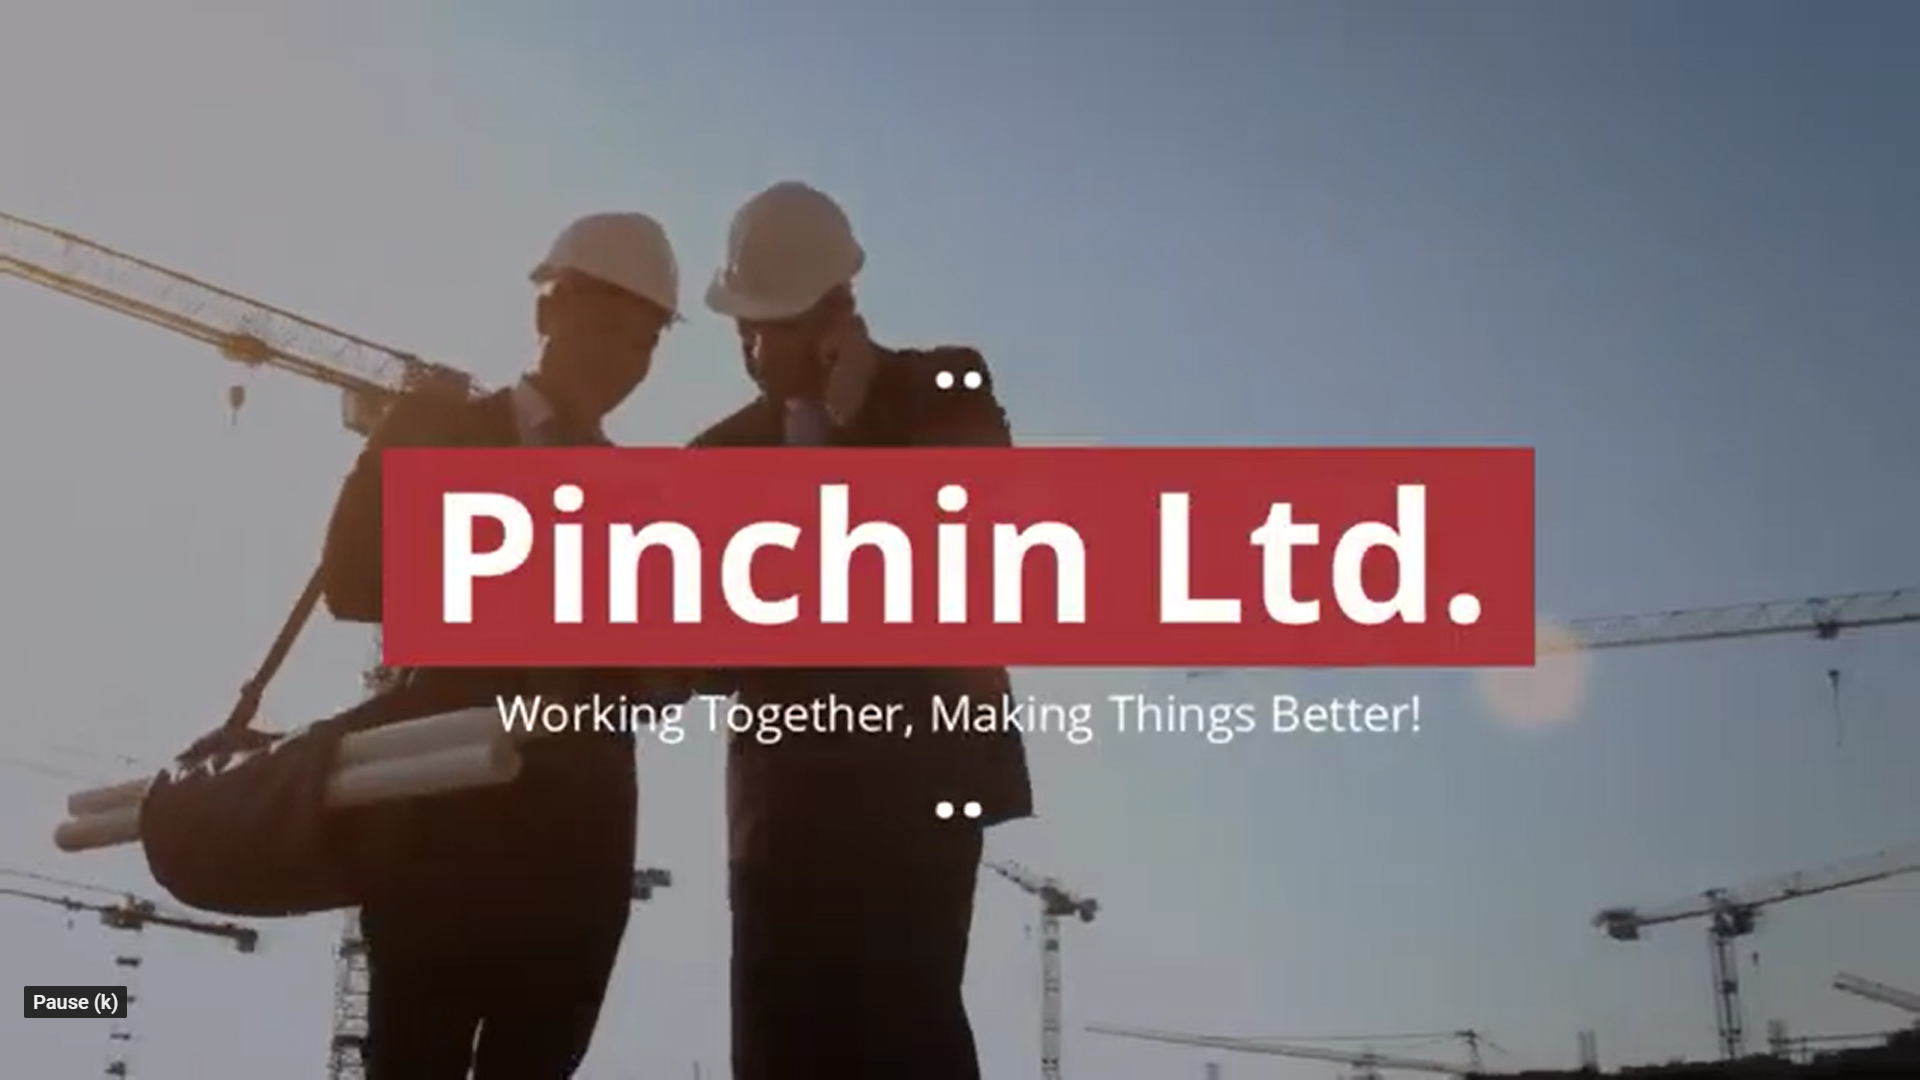 Load video: Pinchin Ltd. Corporate Video